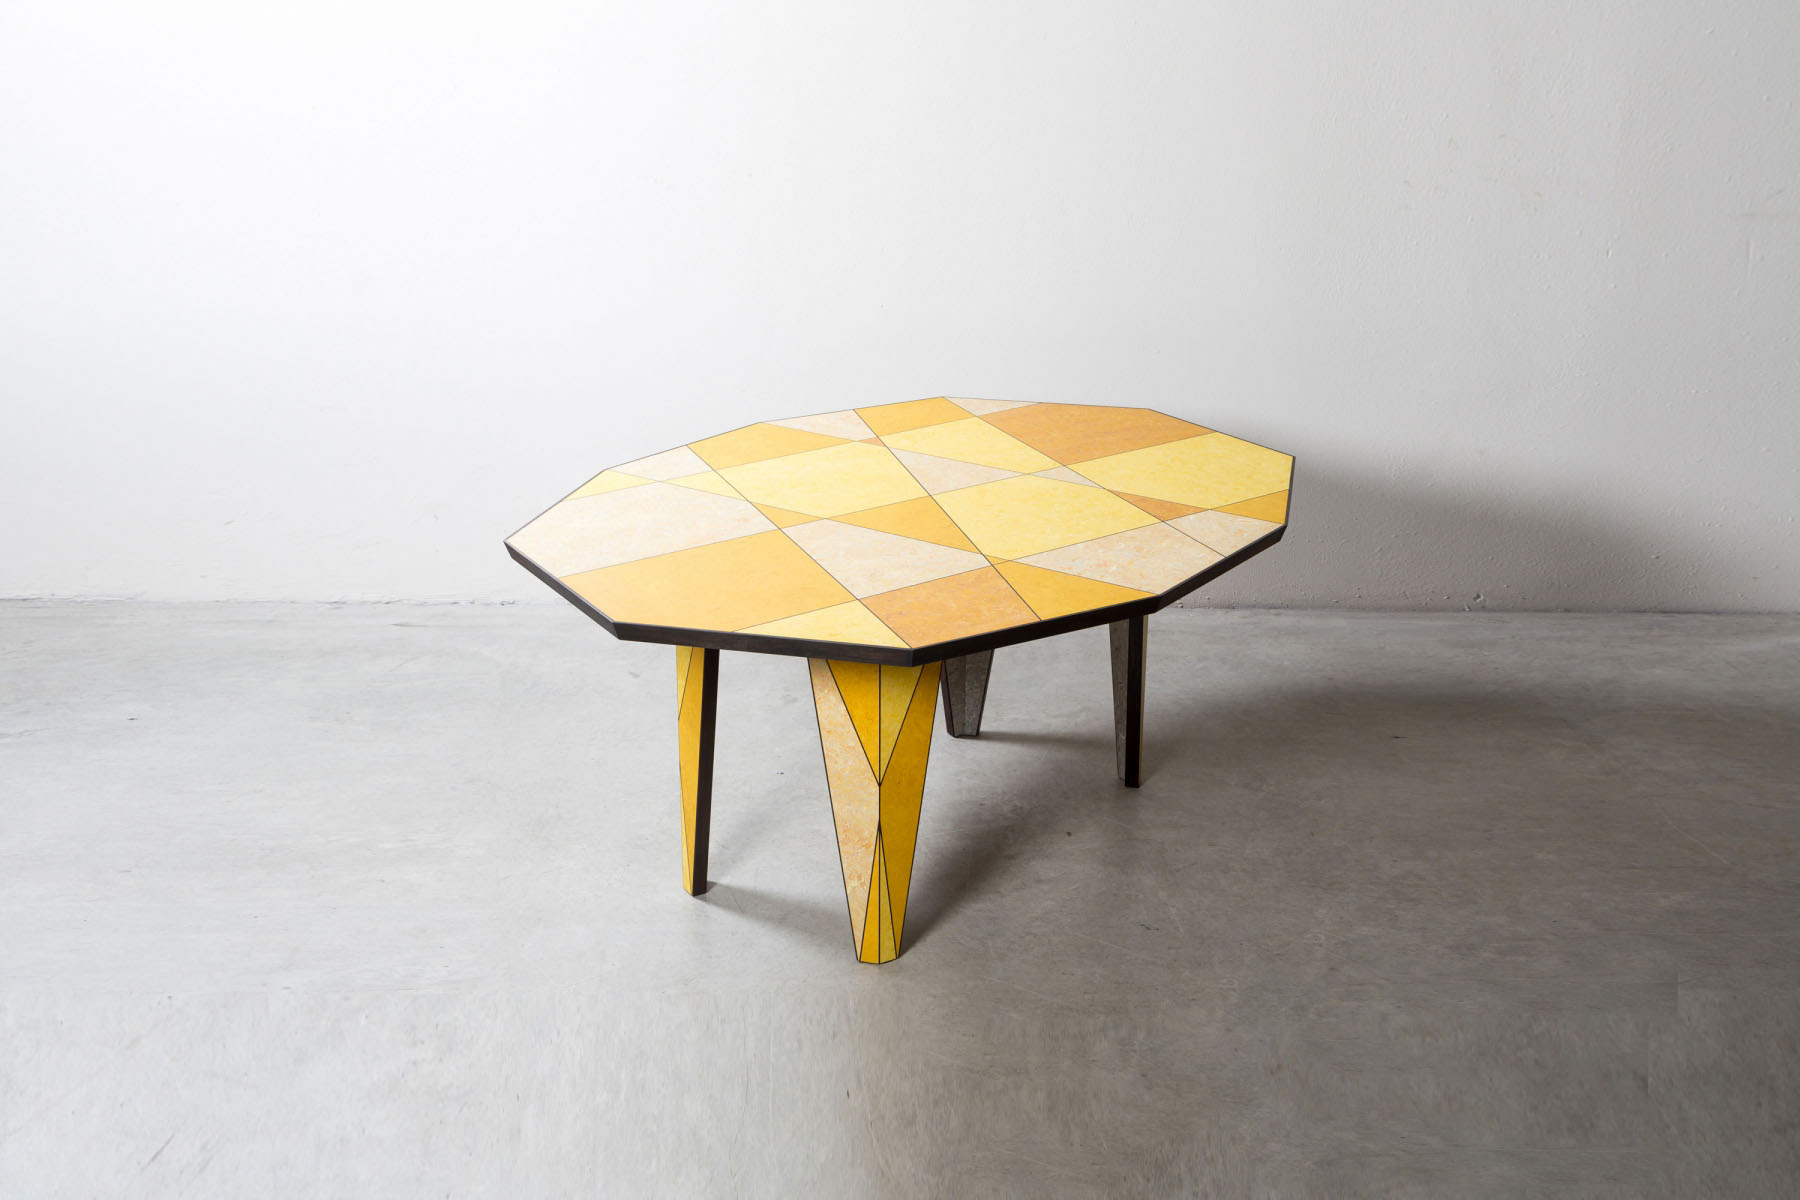 Lino table 02 Martino Gamper pic-1